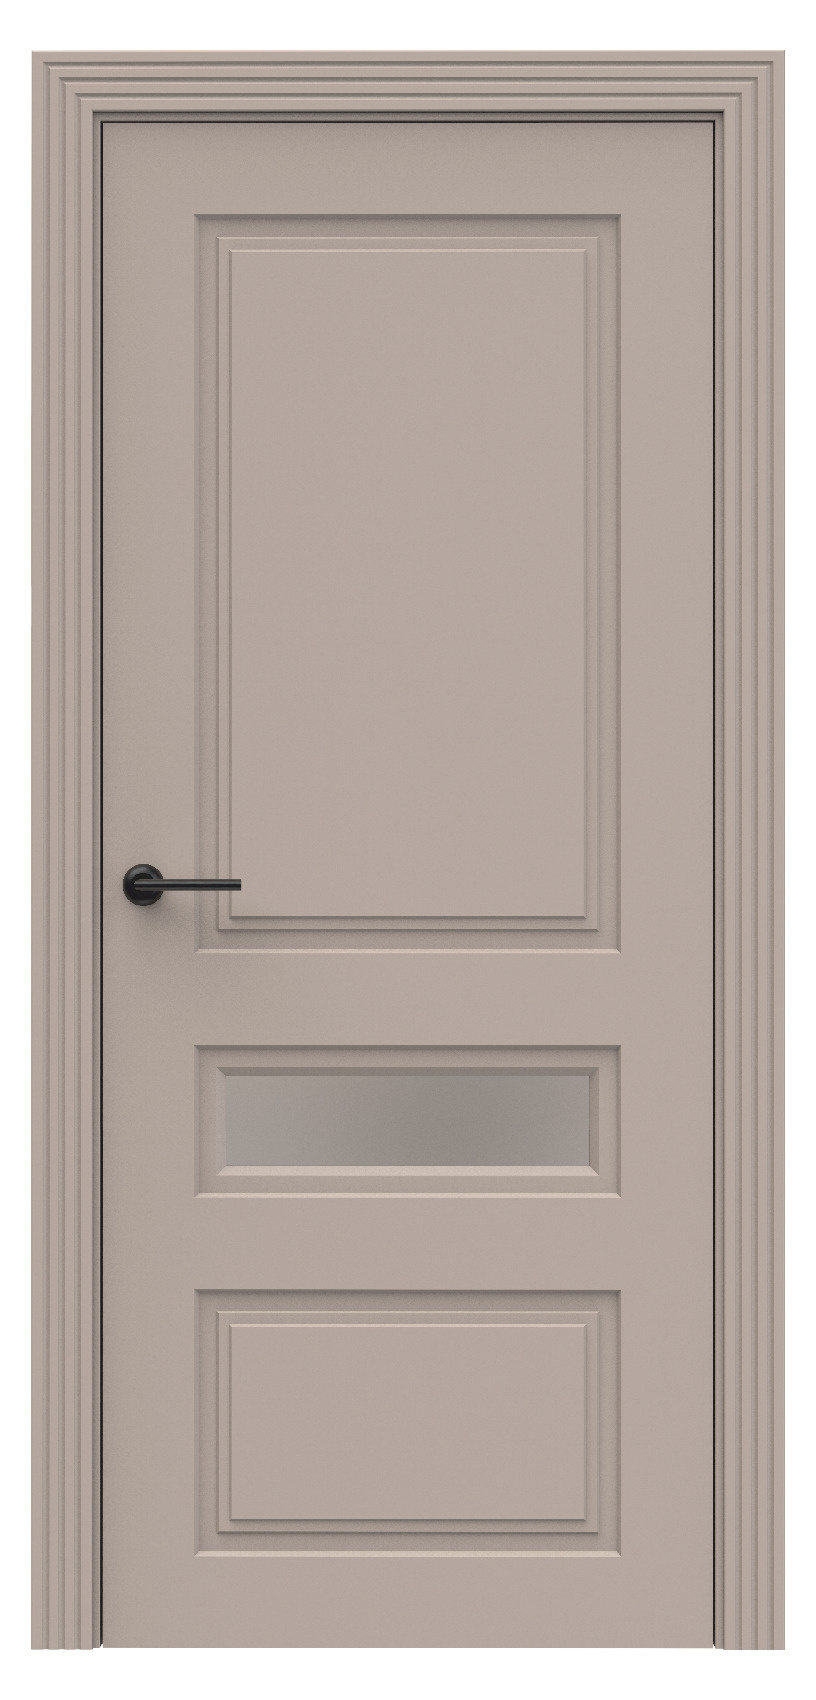 Questdoors Межкомнатная дверь QI6, арт. 17967 - фото №1